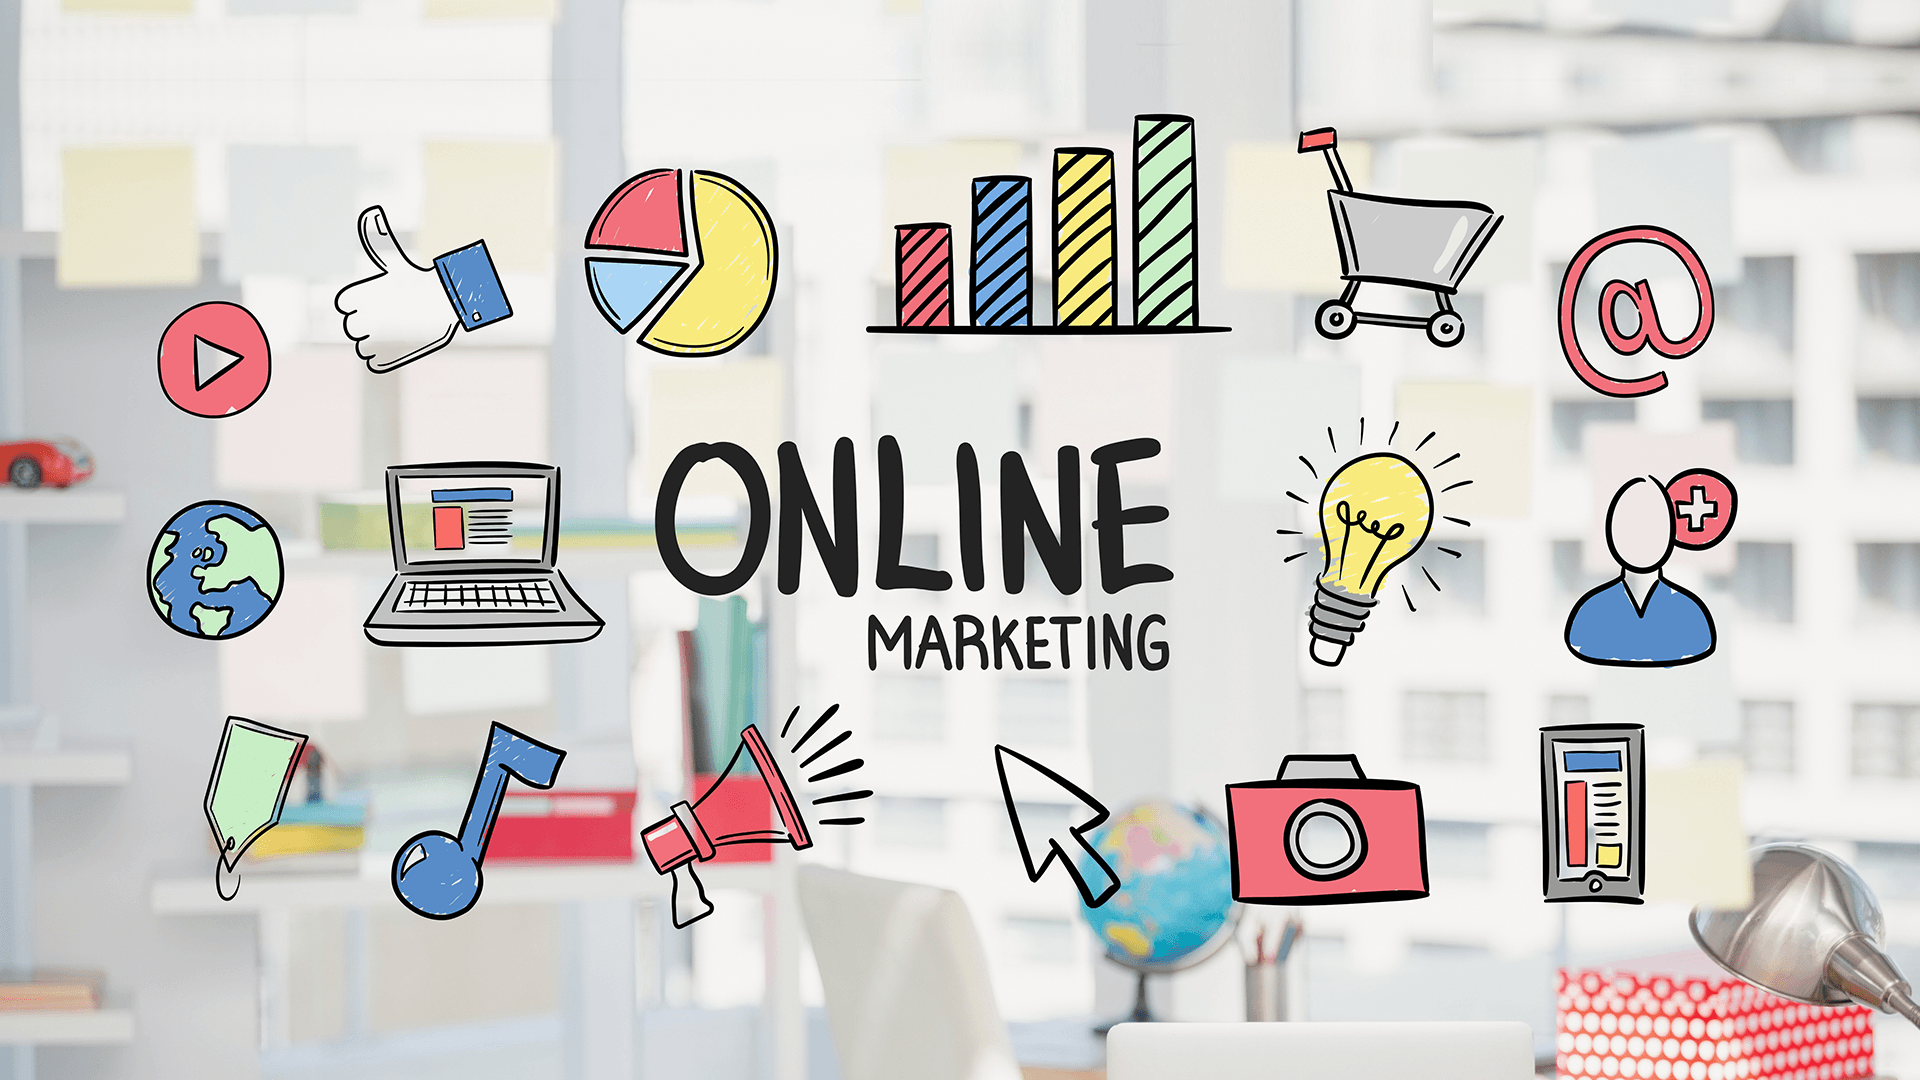 Digital Marketing Wallpapers - Top Free Digital Marketing Backgrounds